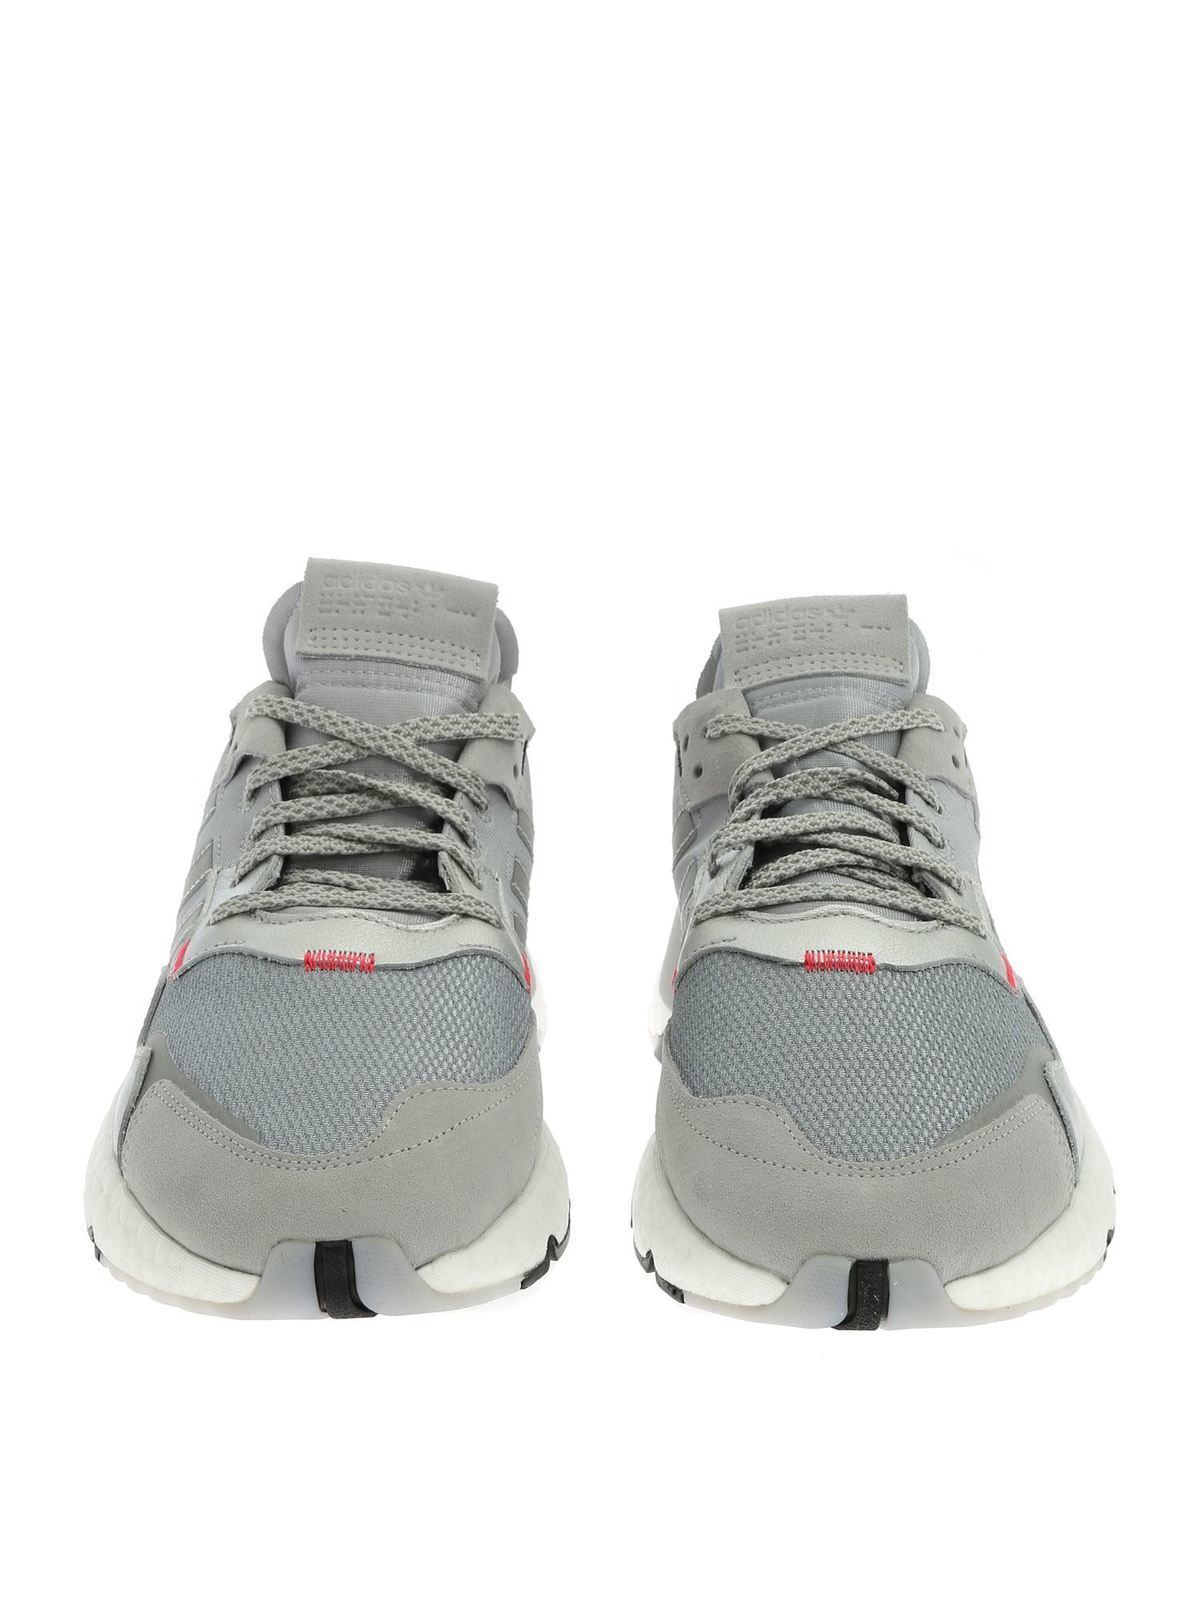 adidas originals white and grey nite jogger trainers